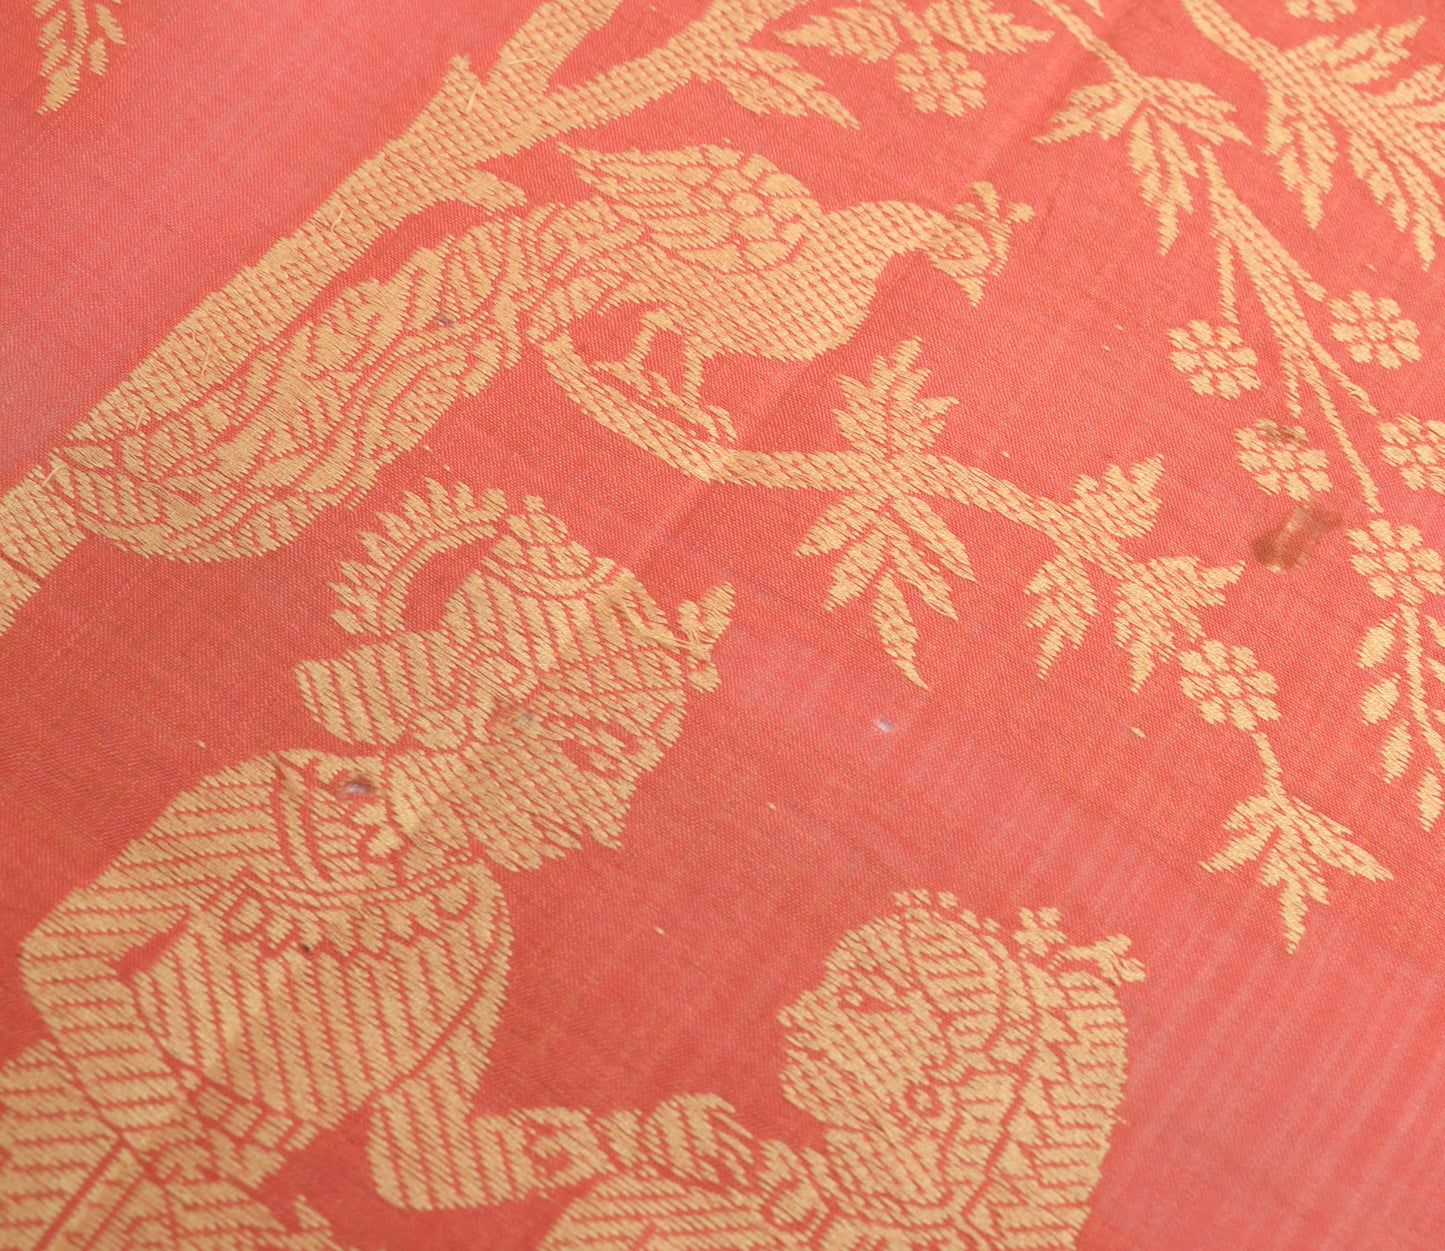 Sushila Vintage Peach Sari Remnant Scrap Cotton Baluchari Woven Craft Fabric